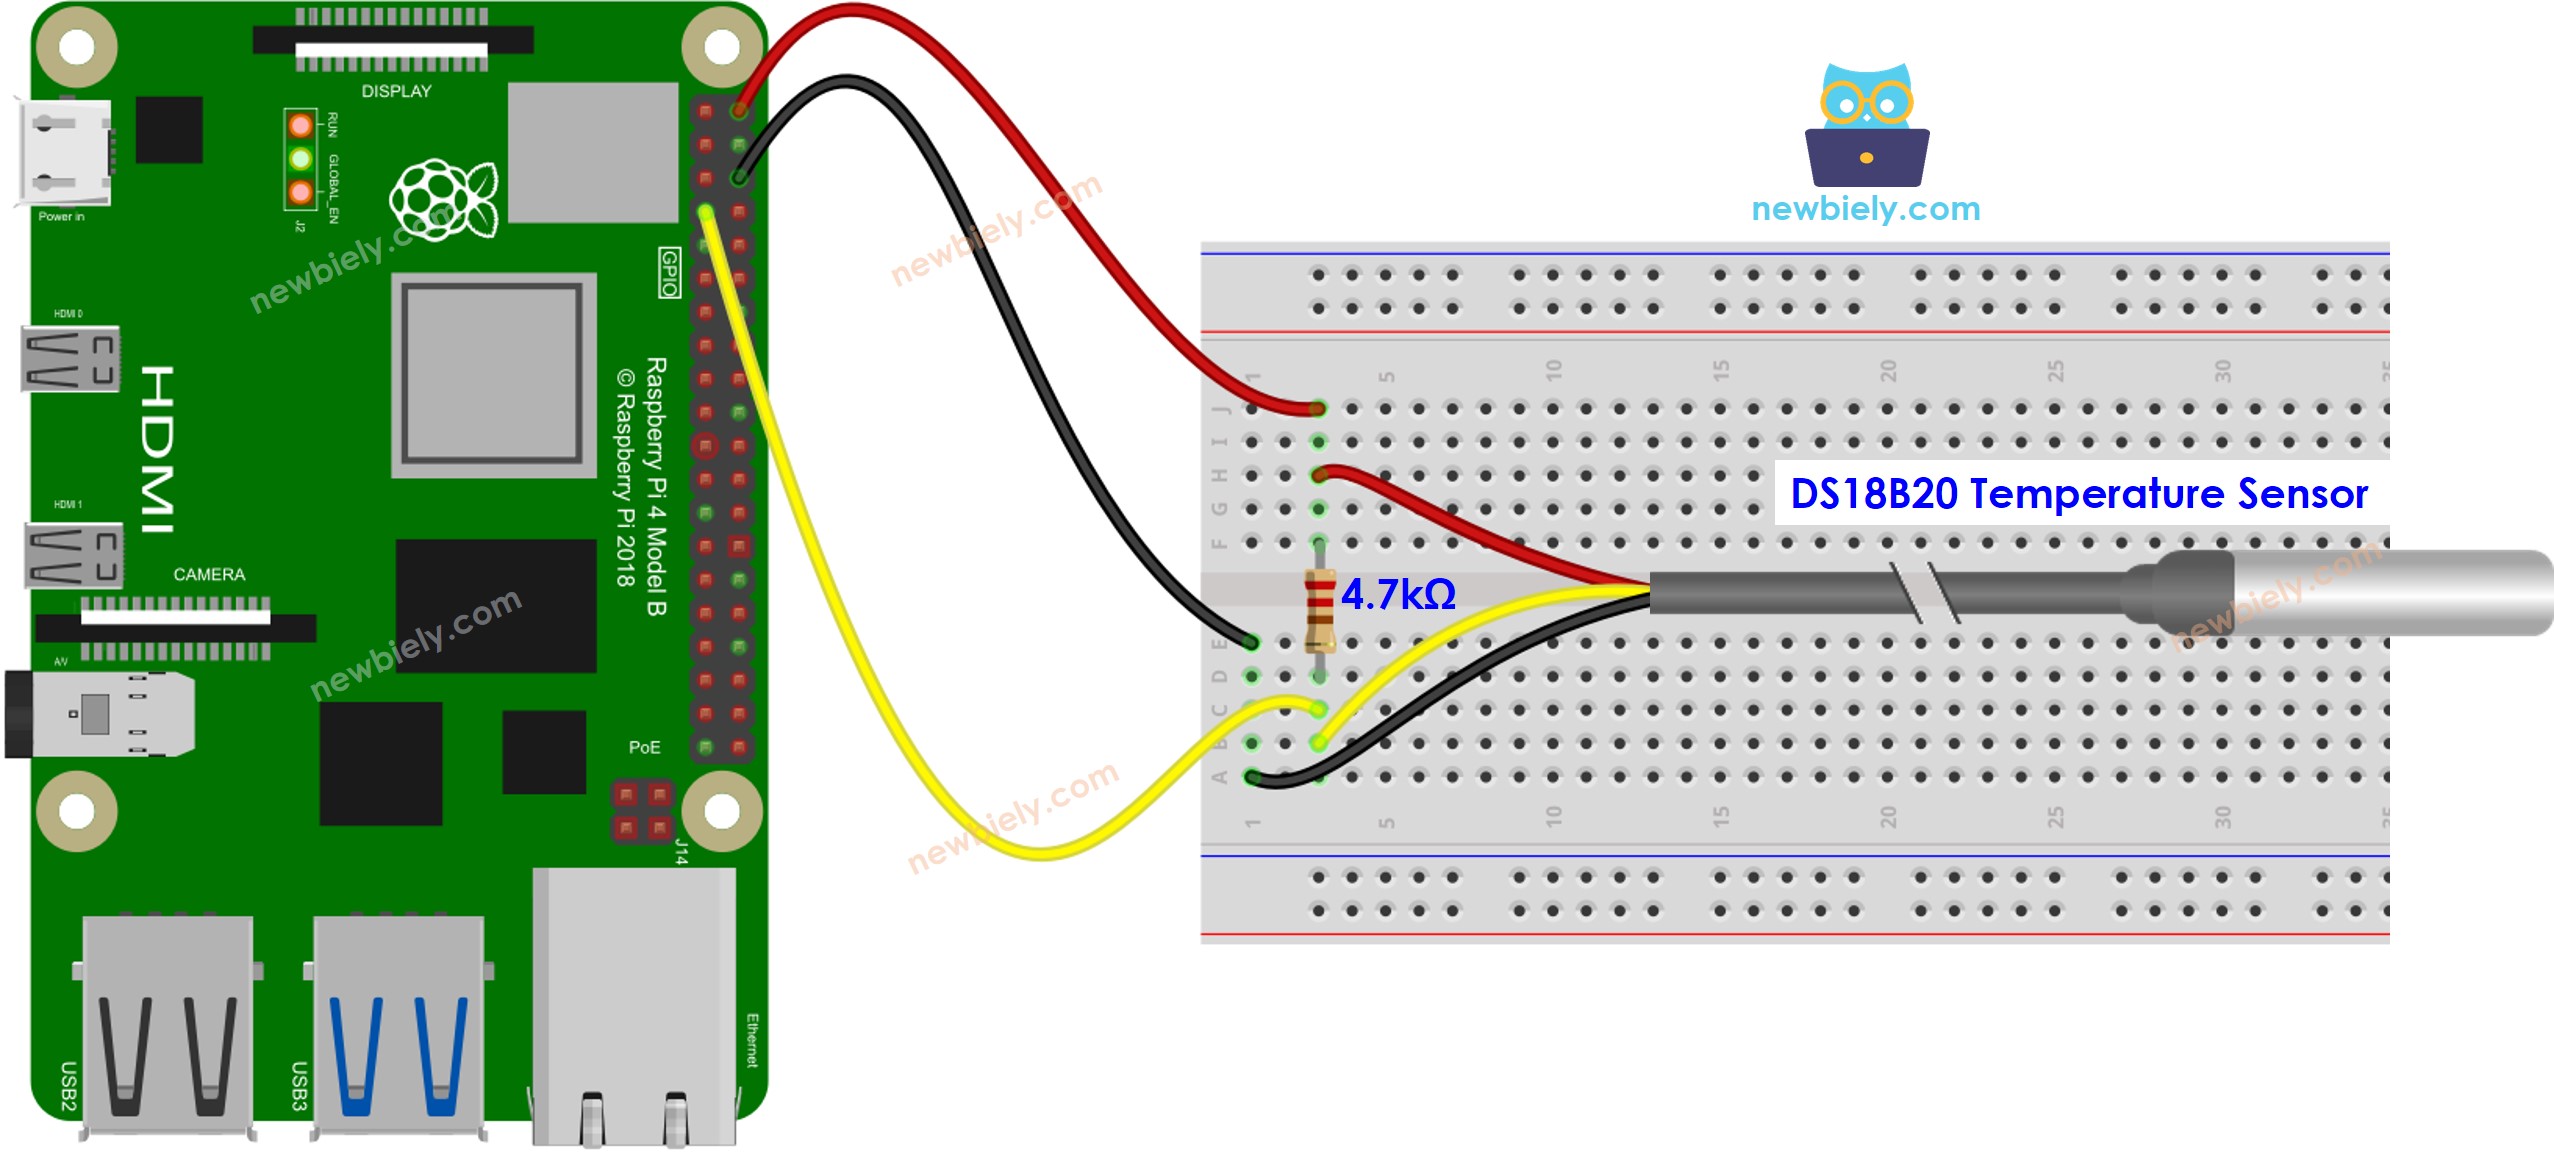 The wiring diagram between Raspberry Pi and temperature sensor